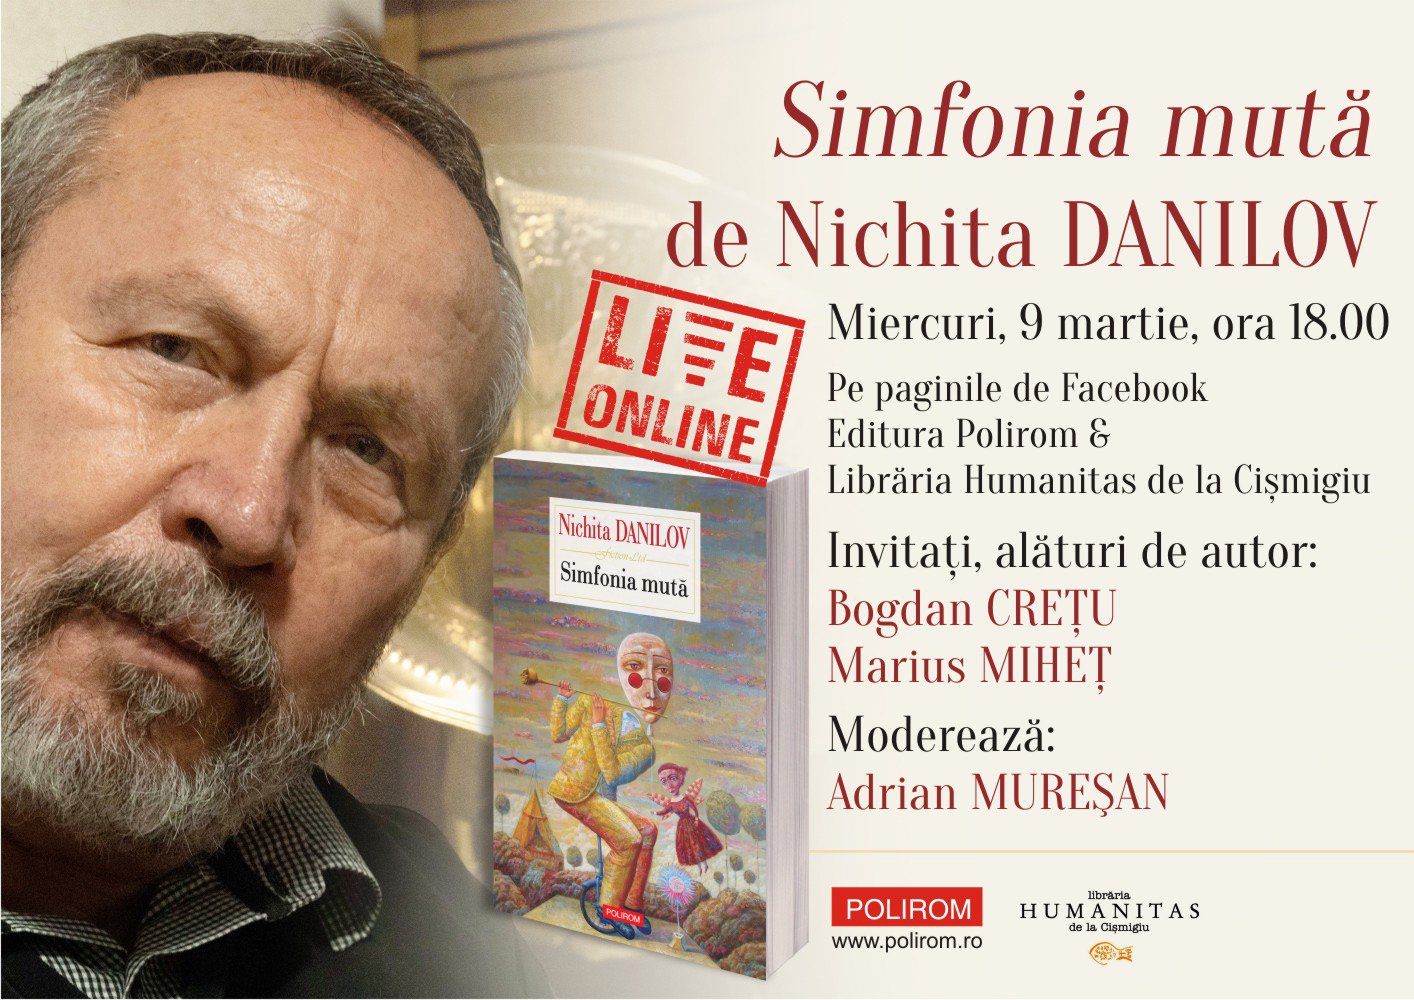  Online & live: Nichita Danilov, Simfonia mută